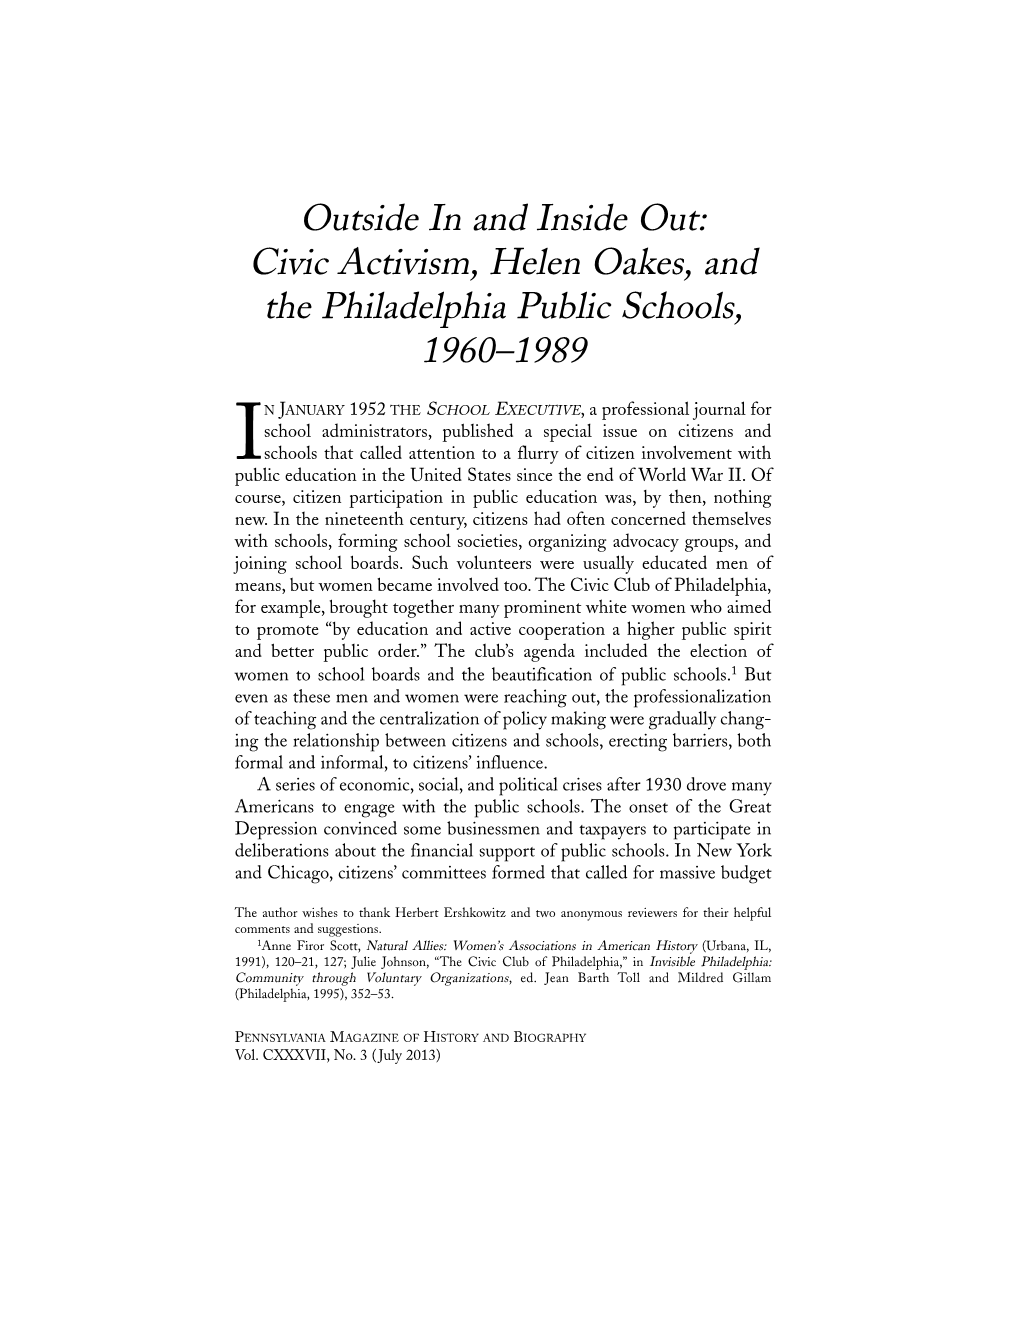 Civic Activism, Helen Oakes, and the Philadelphia Public Schools, 1960–1989